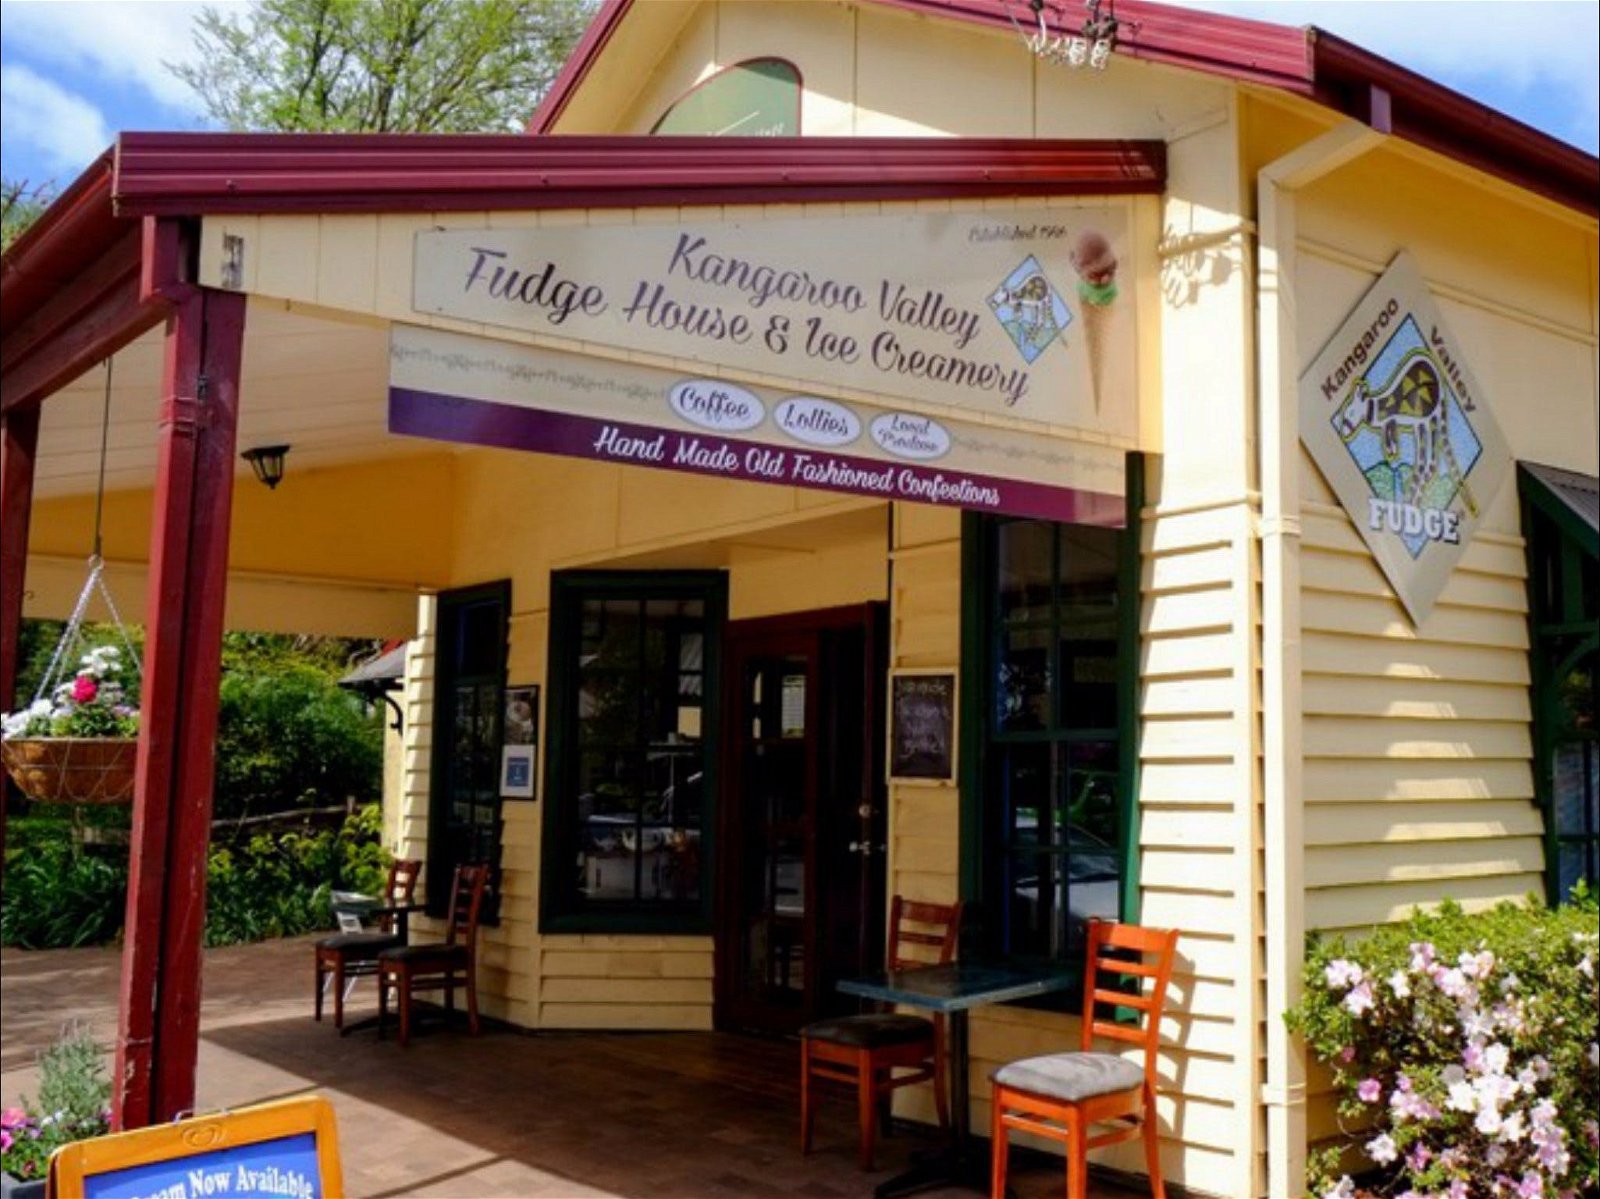 Kangaroo Valley Fudge House and Ice Creamery - Australia Accommodation